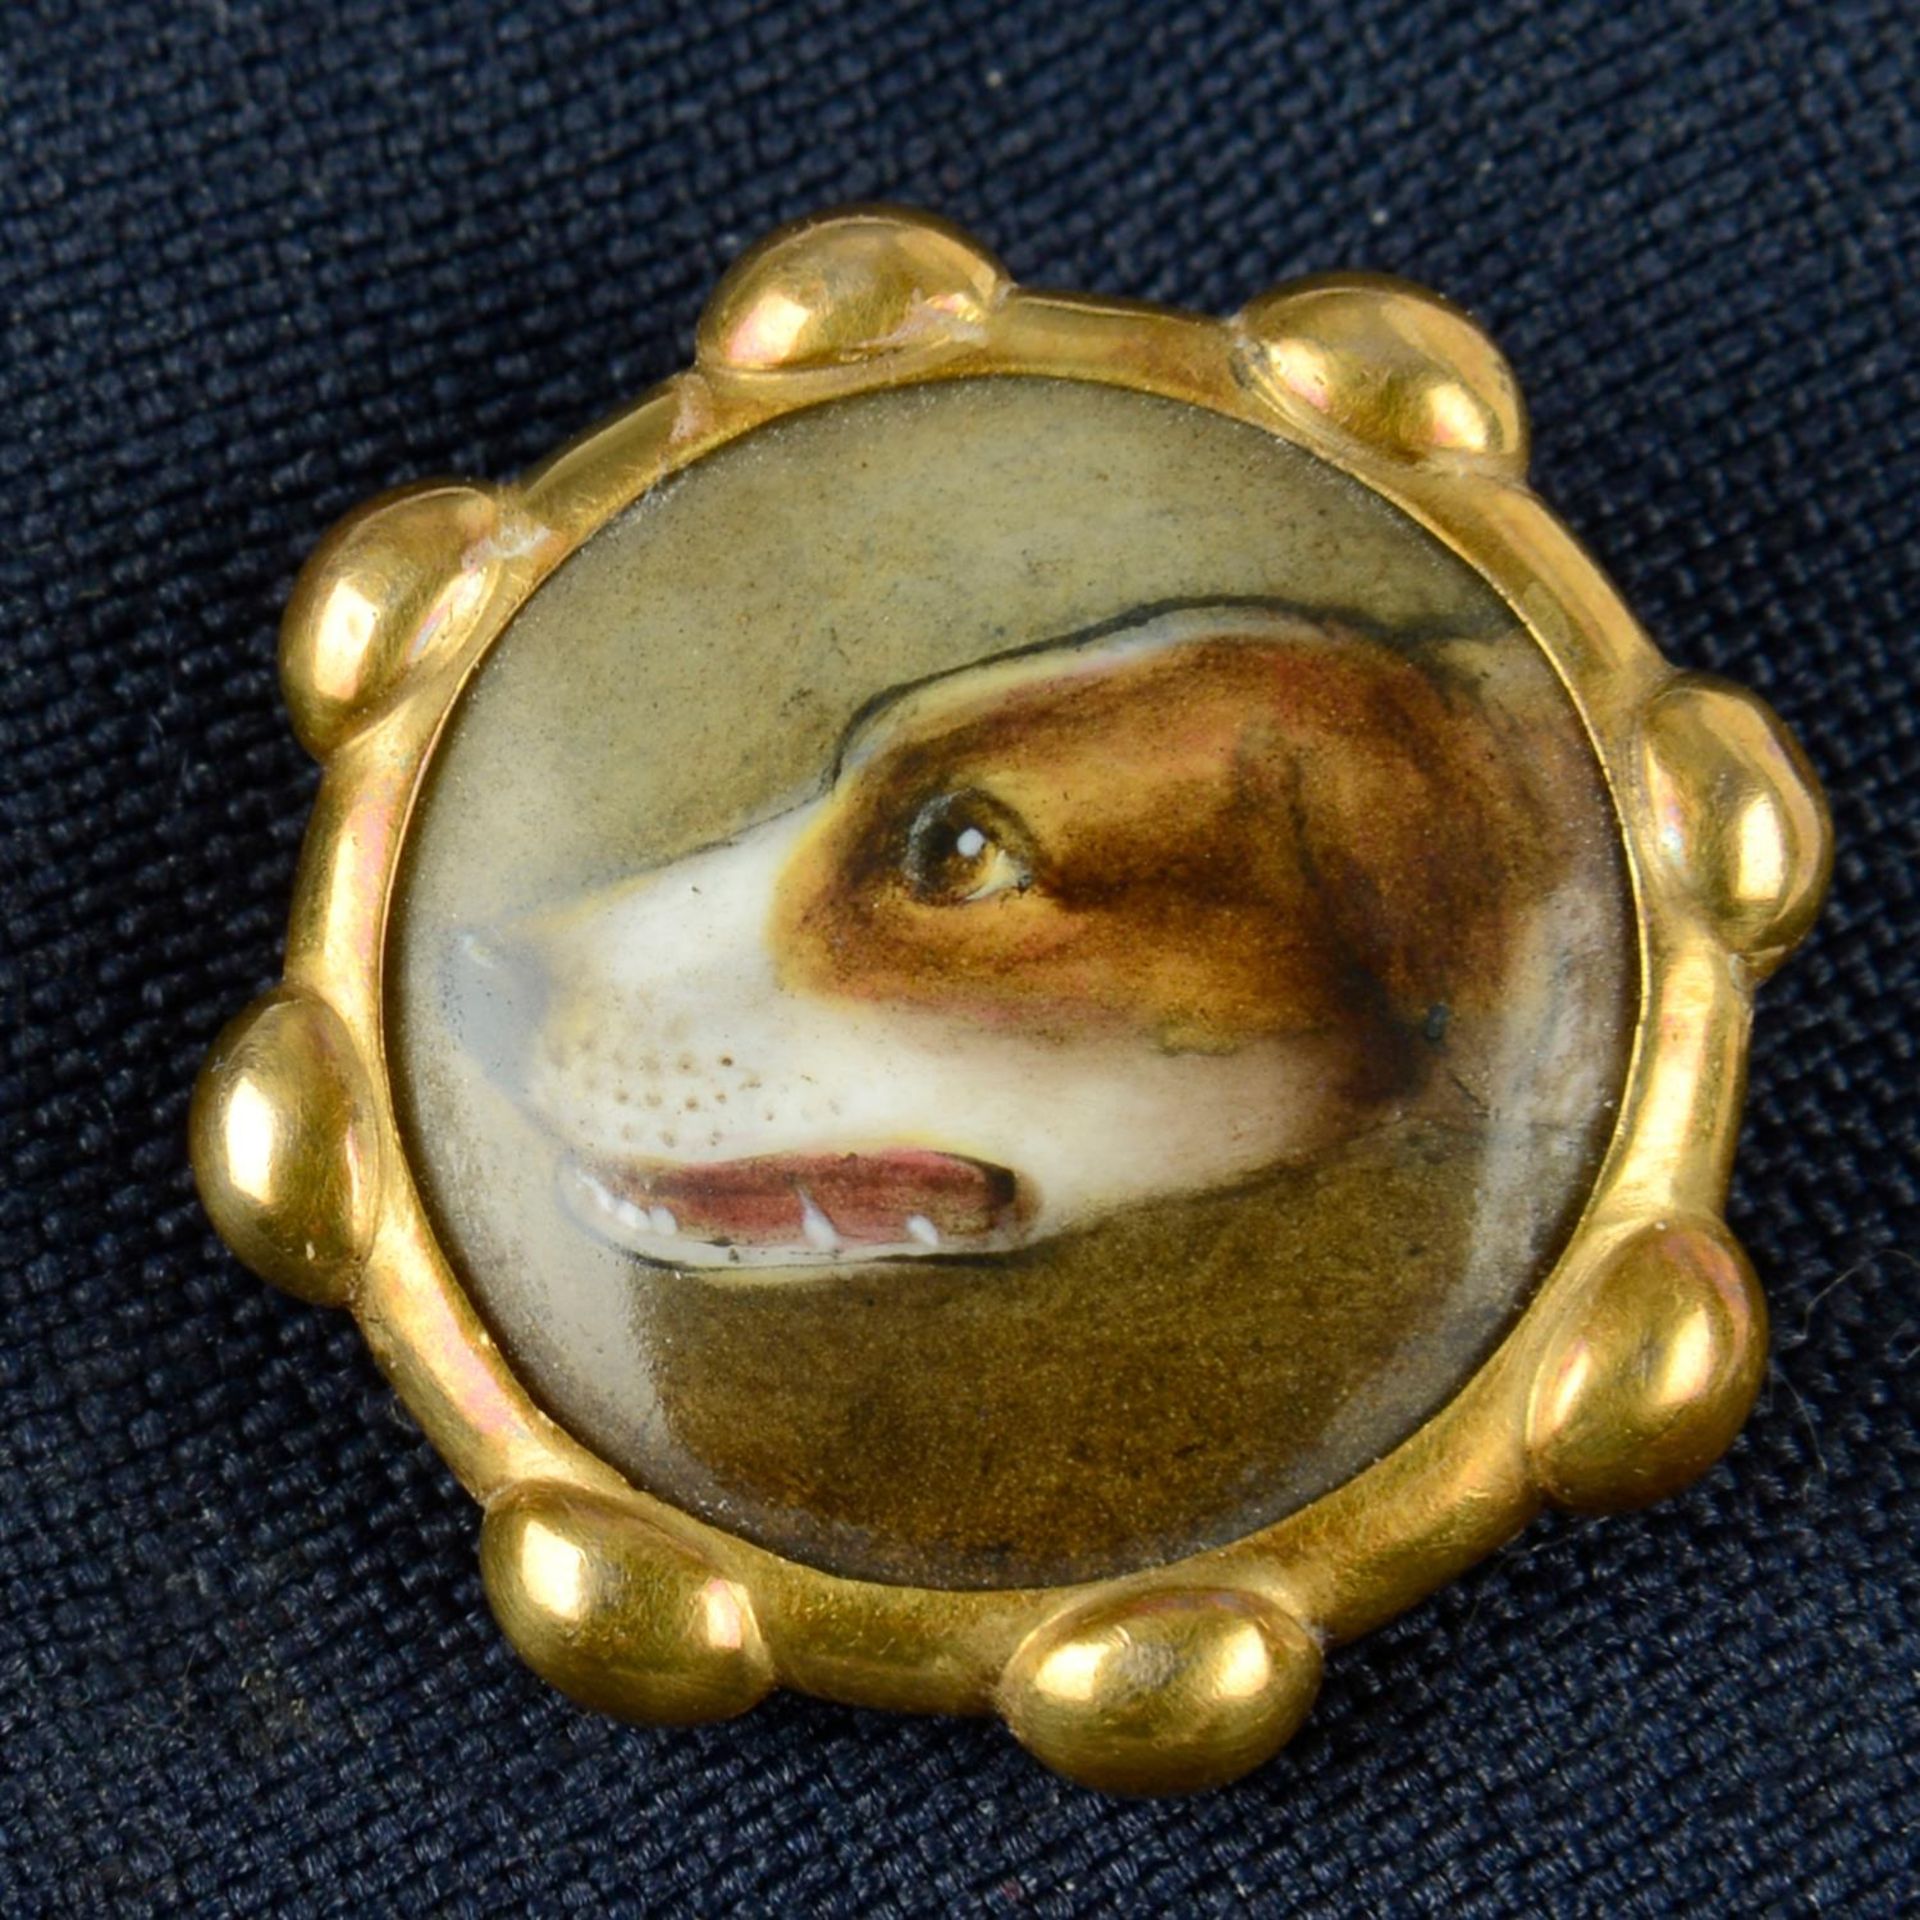 A Victorian gold enamel stickpin, possibly depicting a beagle hound dog head.